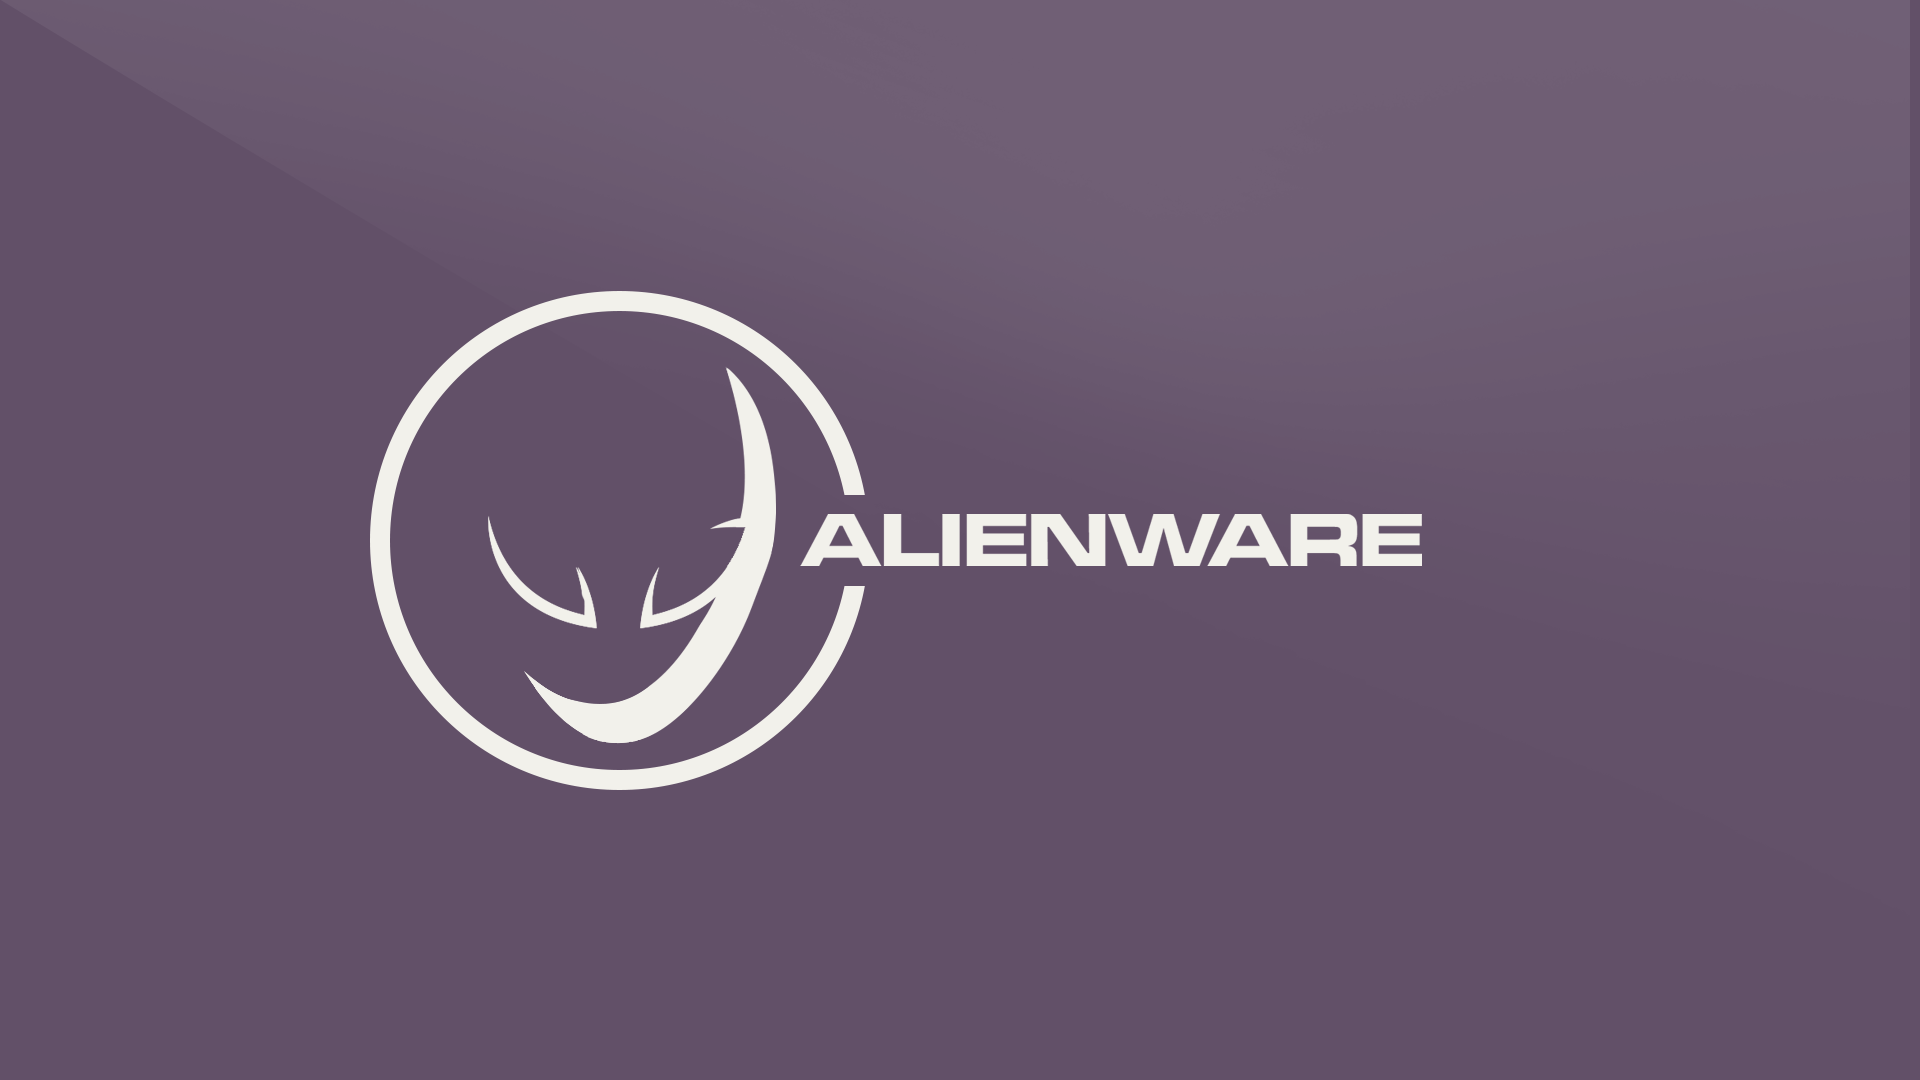 Alienware Logo Company Video Games Dell Simple Minimalism 1920x1080